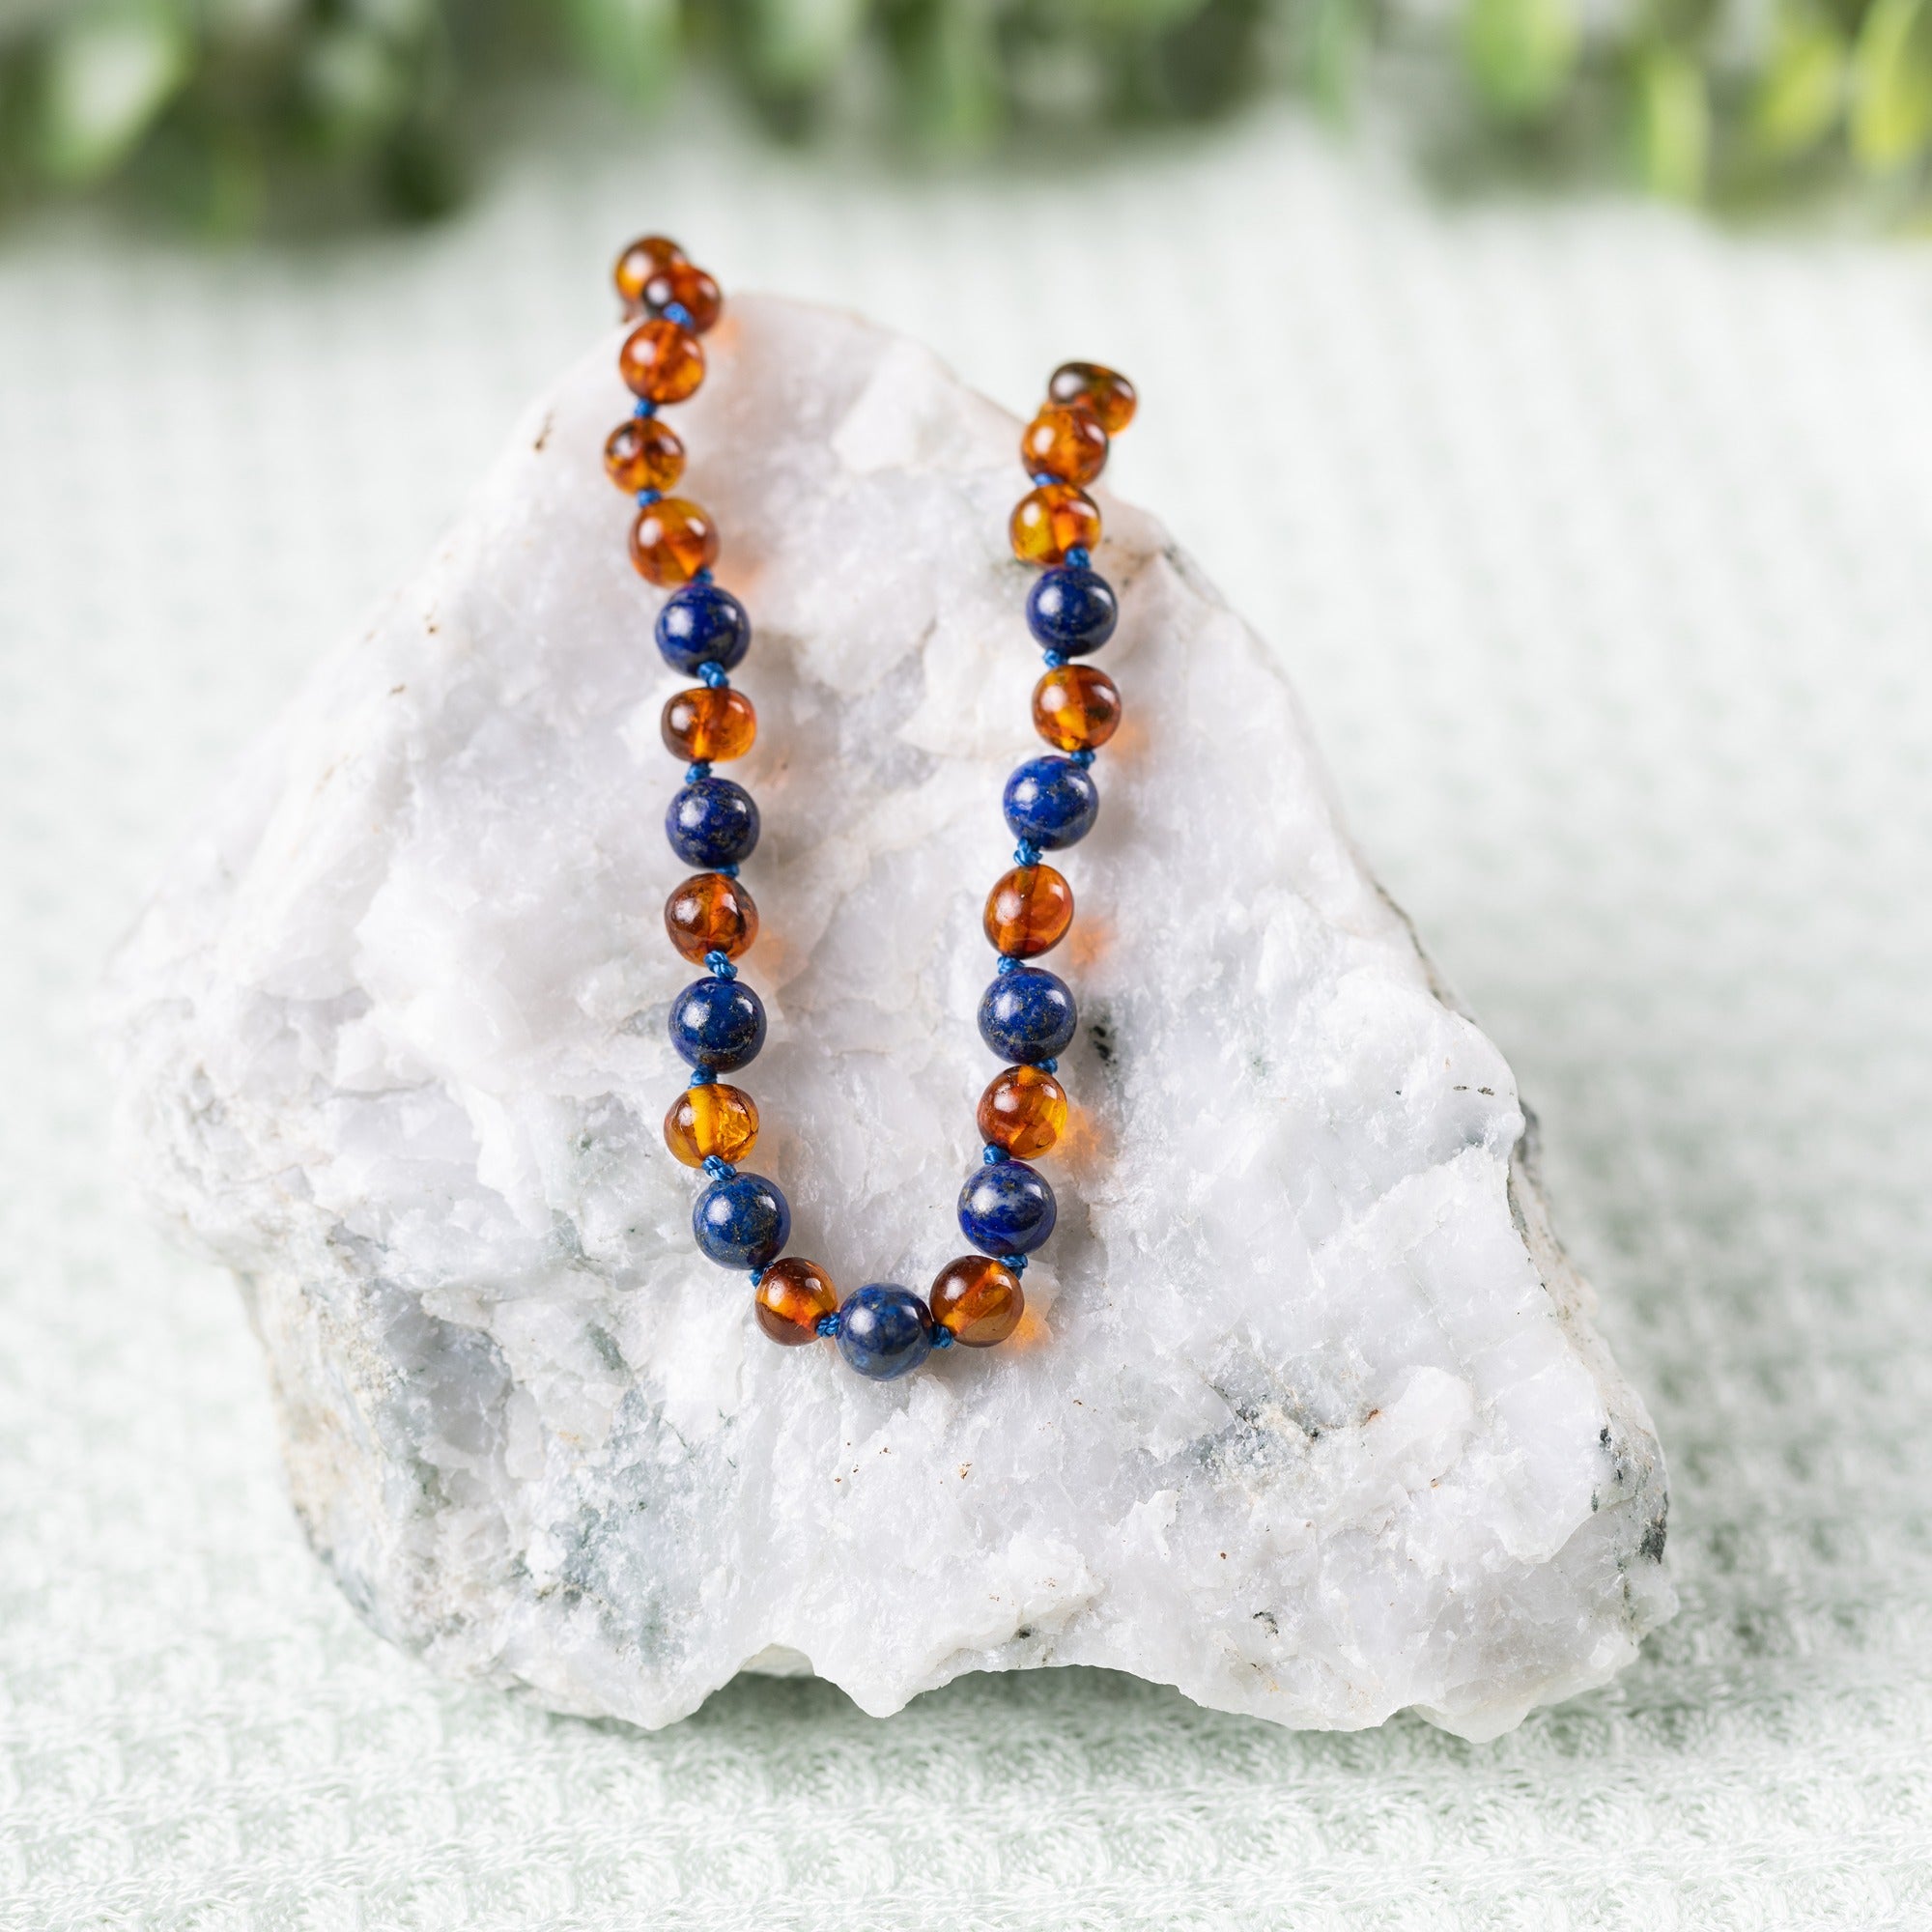 Lapis lazuli beaded buddha bracelet earrings set at ₹2450 | Azilaa